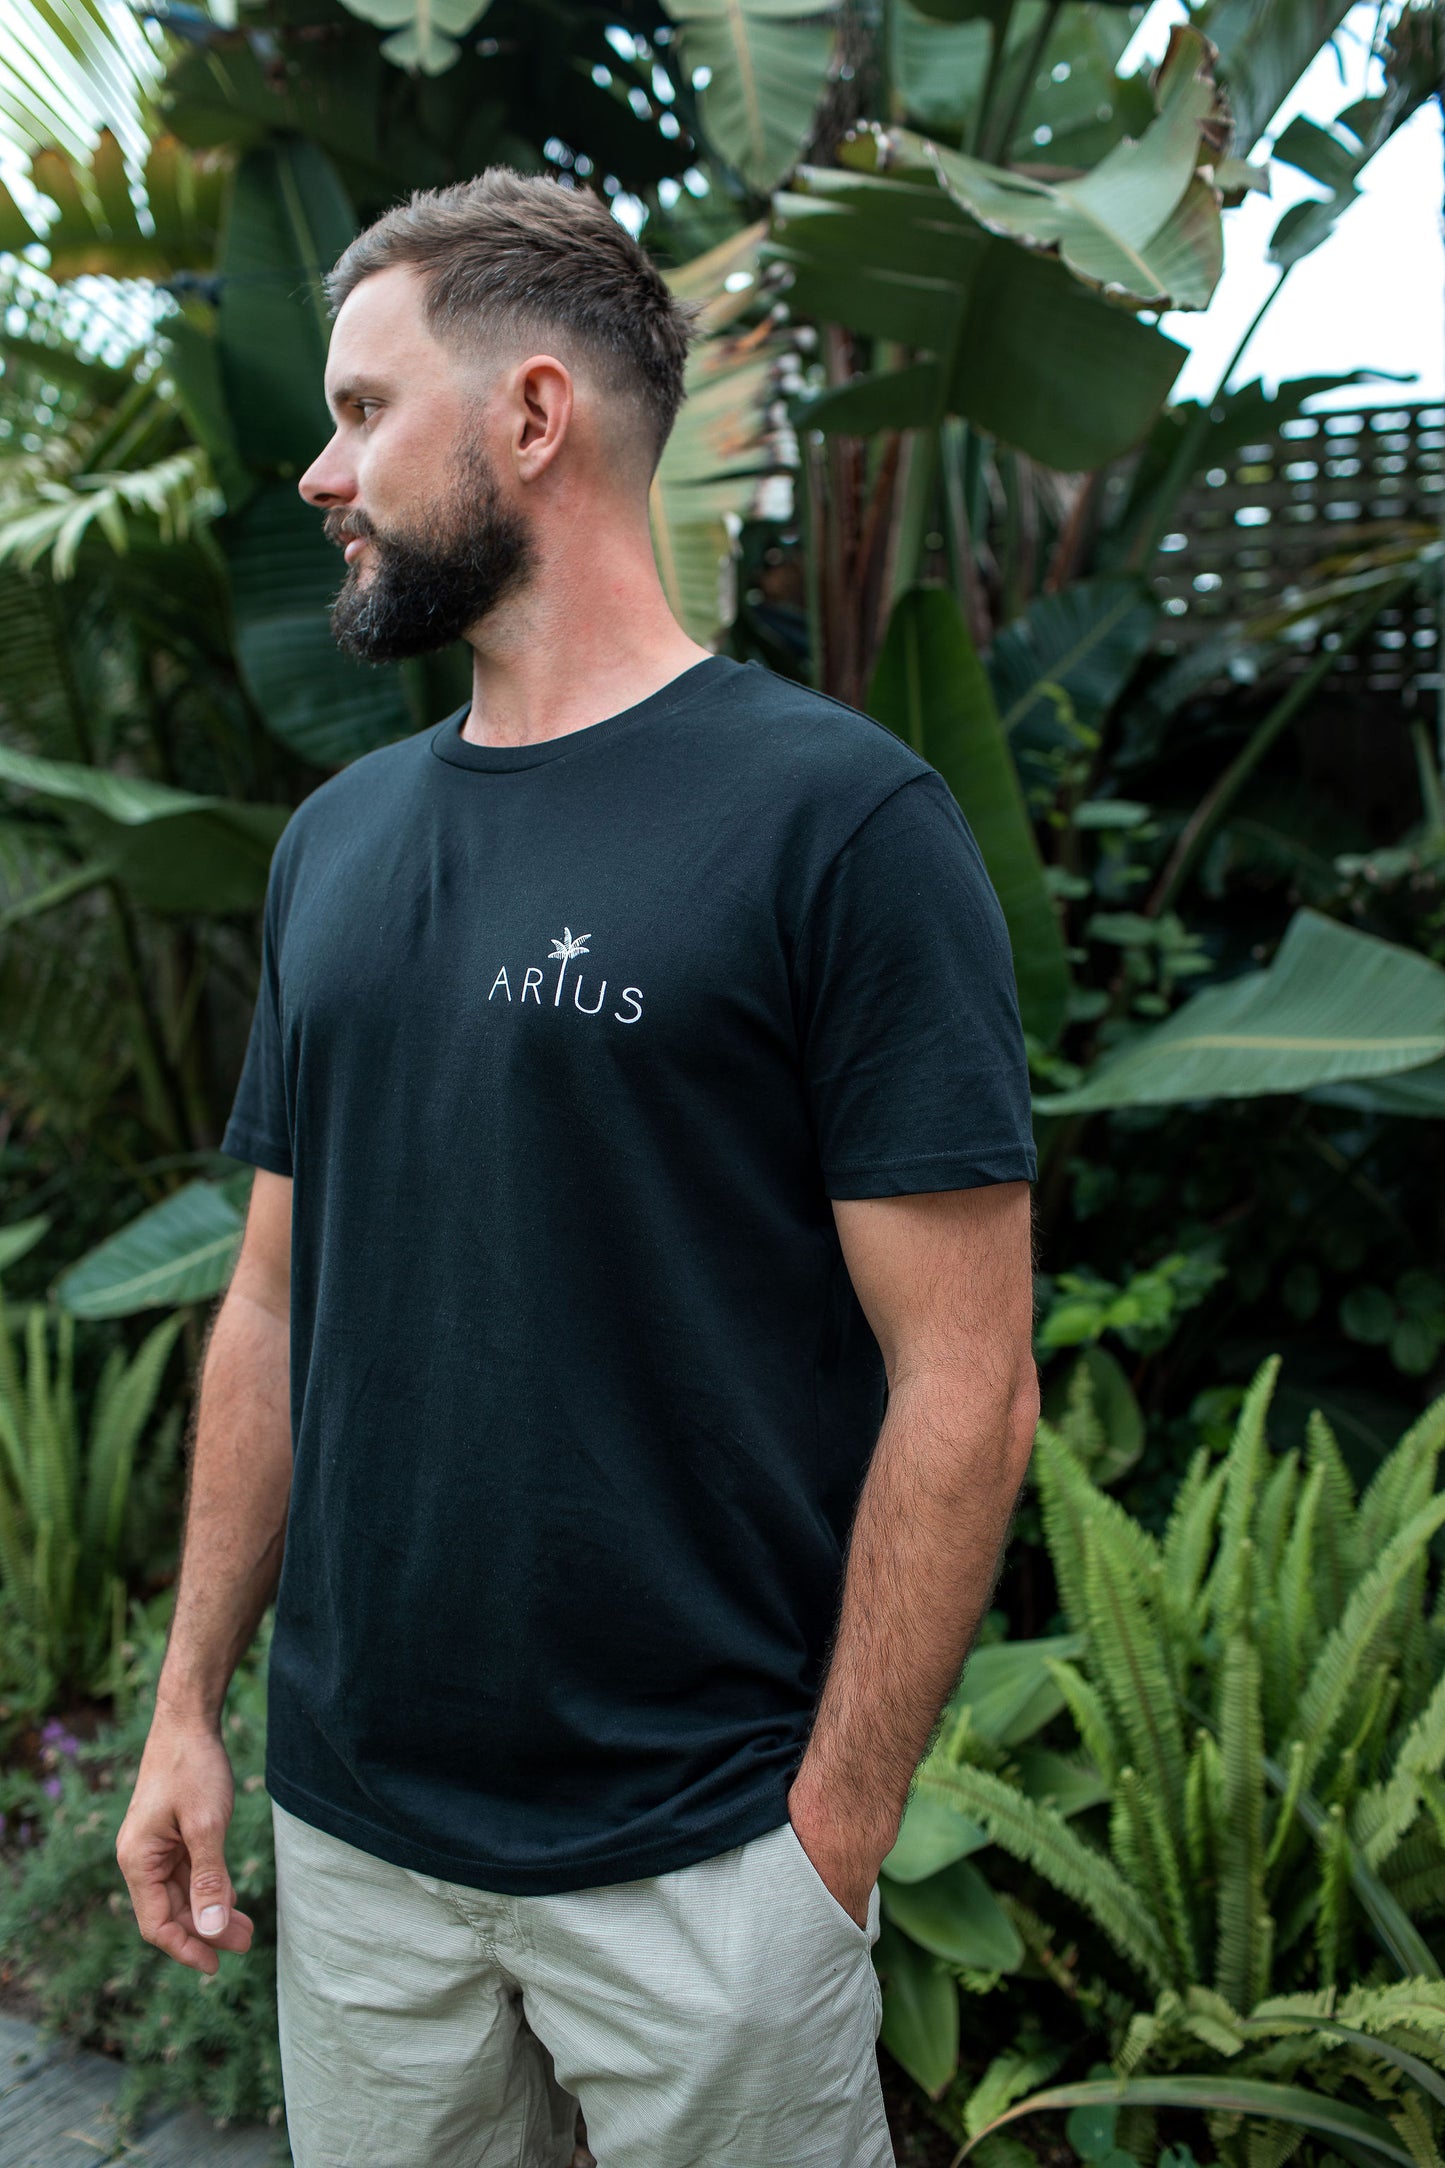 Man wearing organic cotton t-shirt with palm tree design